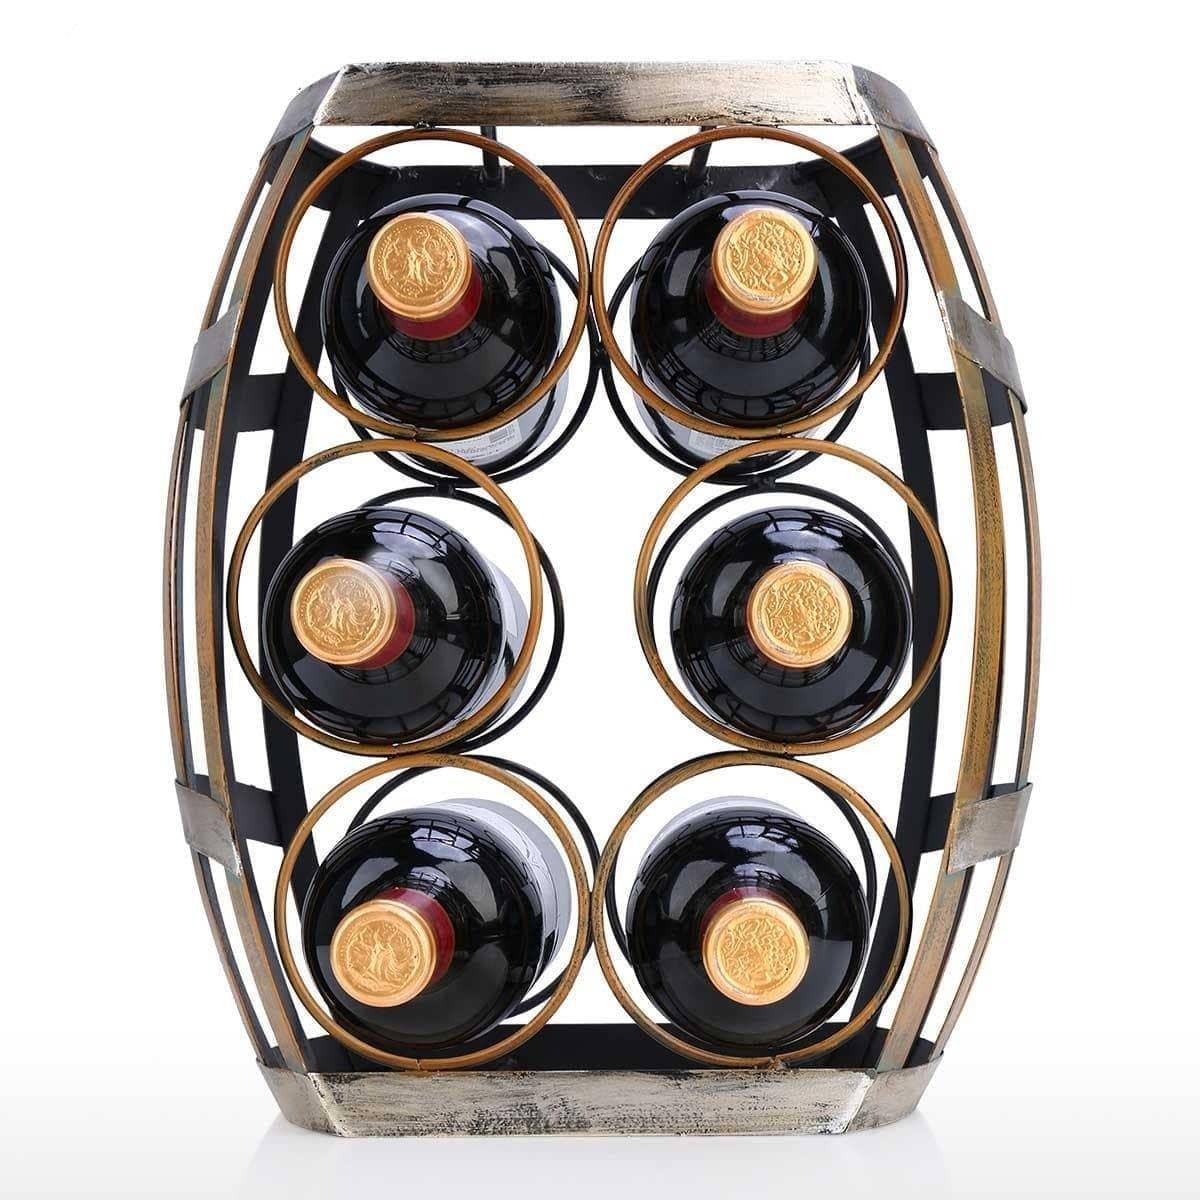 Display Your Wines in Style with Barrel Iron Metal Wine Storage Rack & Holder - Retro & Elegant